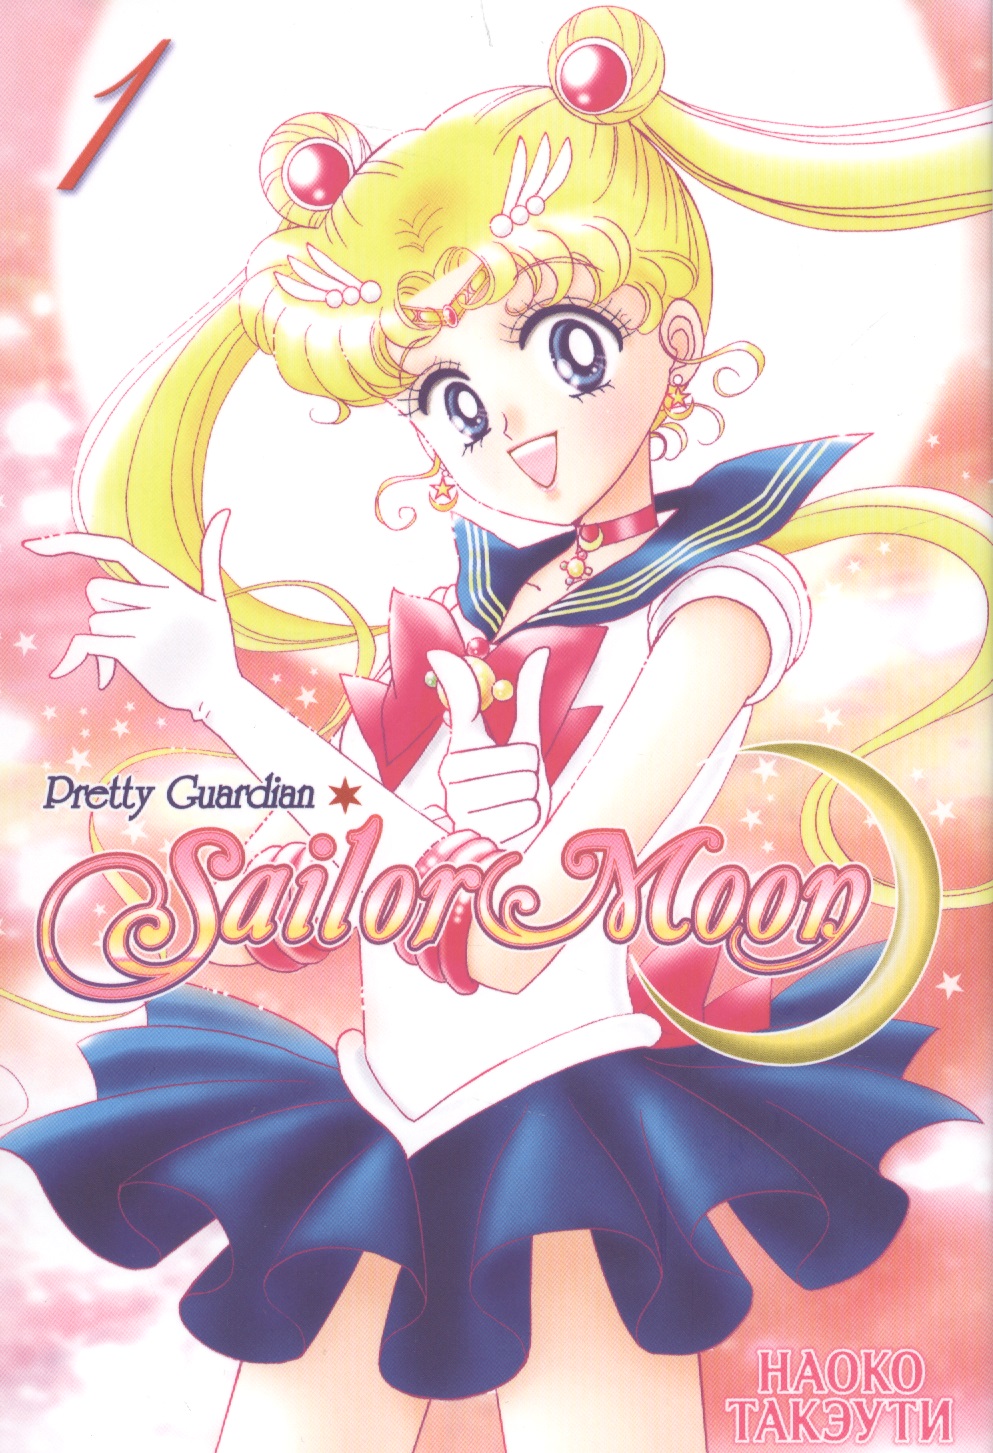 Такэути Наоко Sailor Moon. Том 1. такэути наоко sailor moon том 7 прекрасный воин